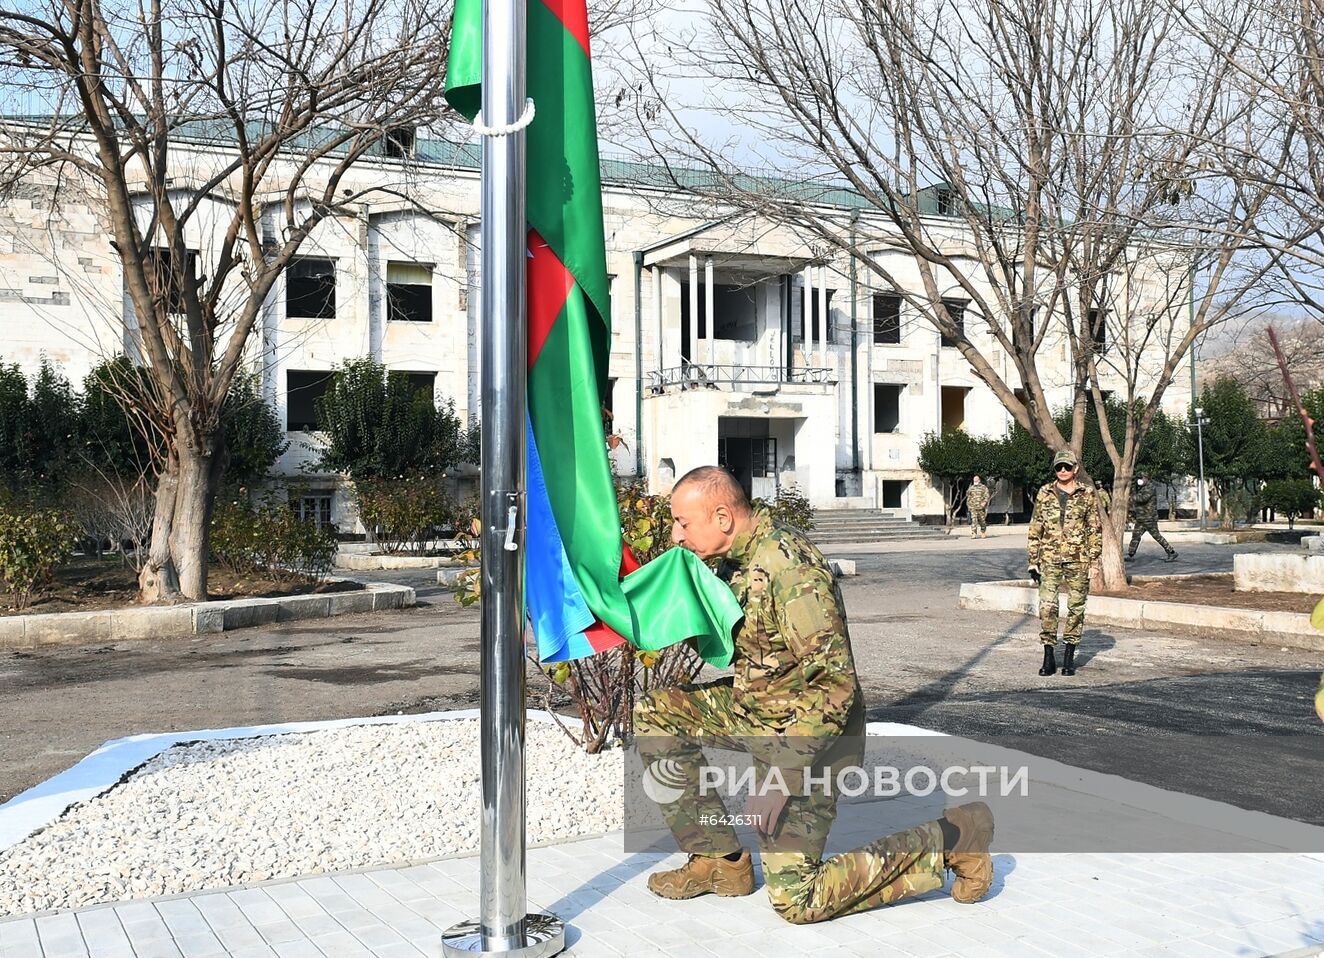 Президент Азербайджана И. Алиев посетил районы, перешедшие под влияние Азербайджана